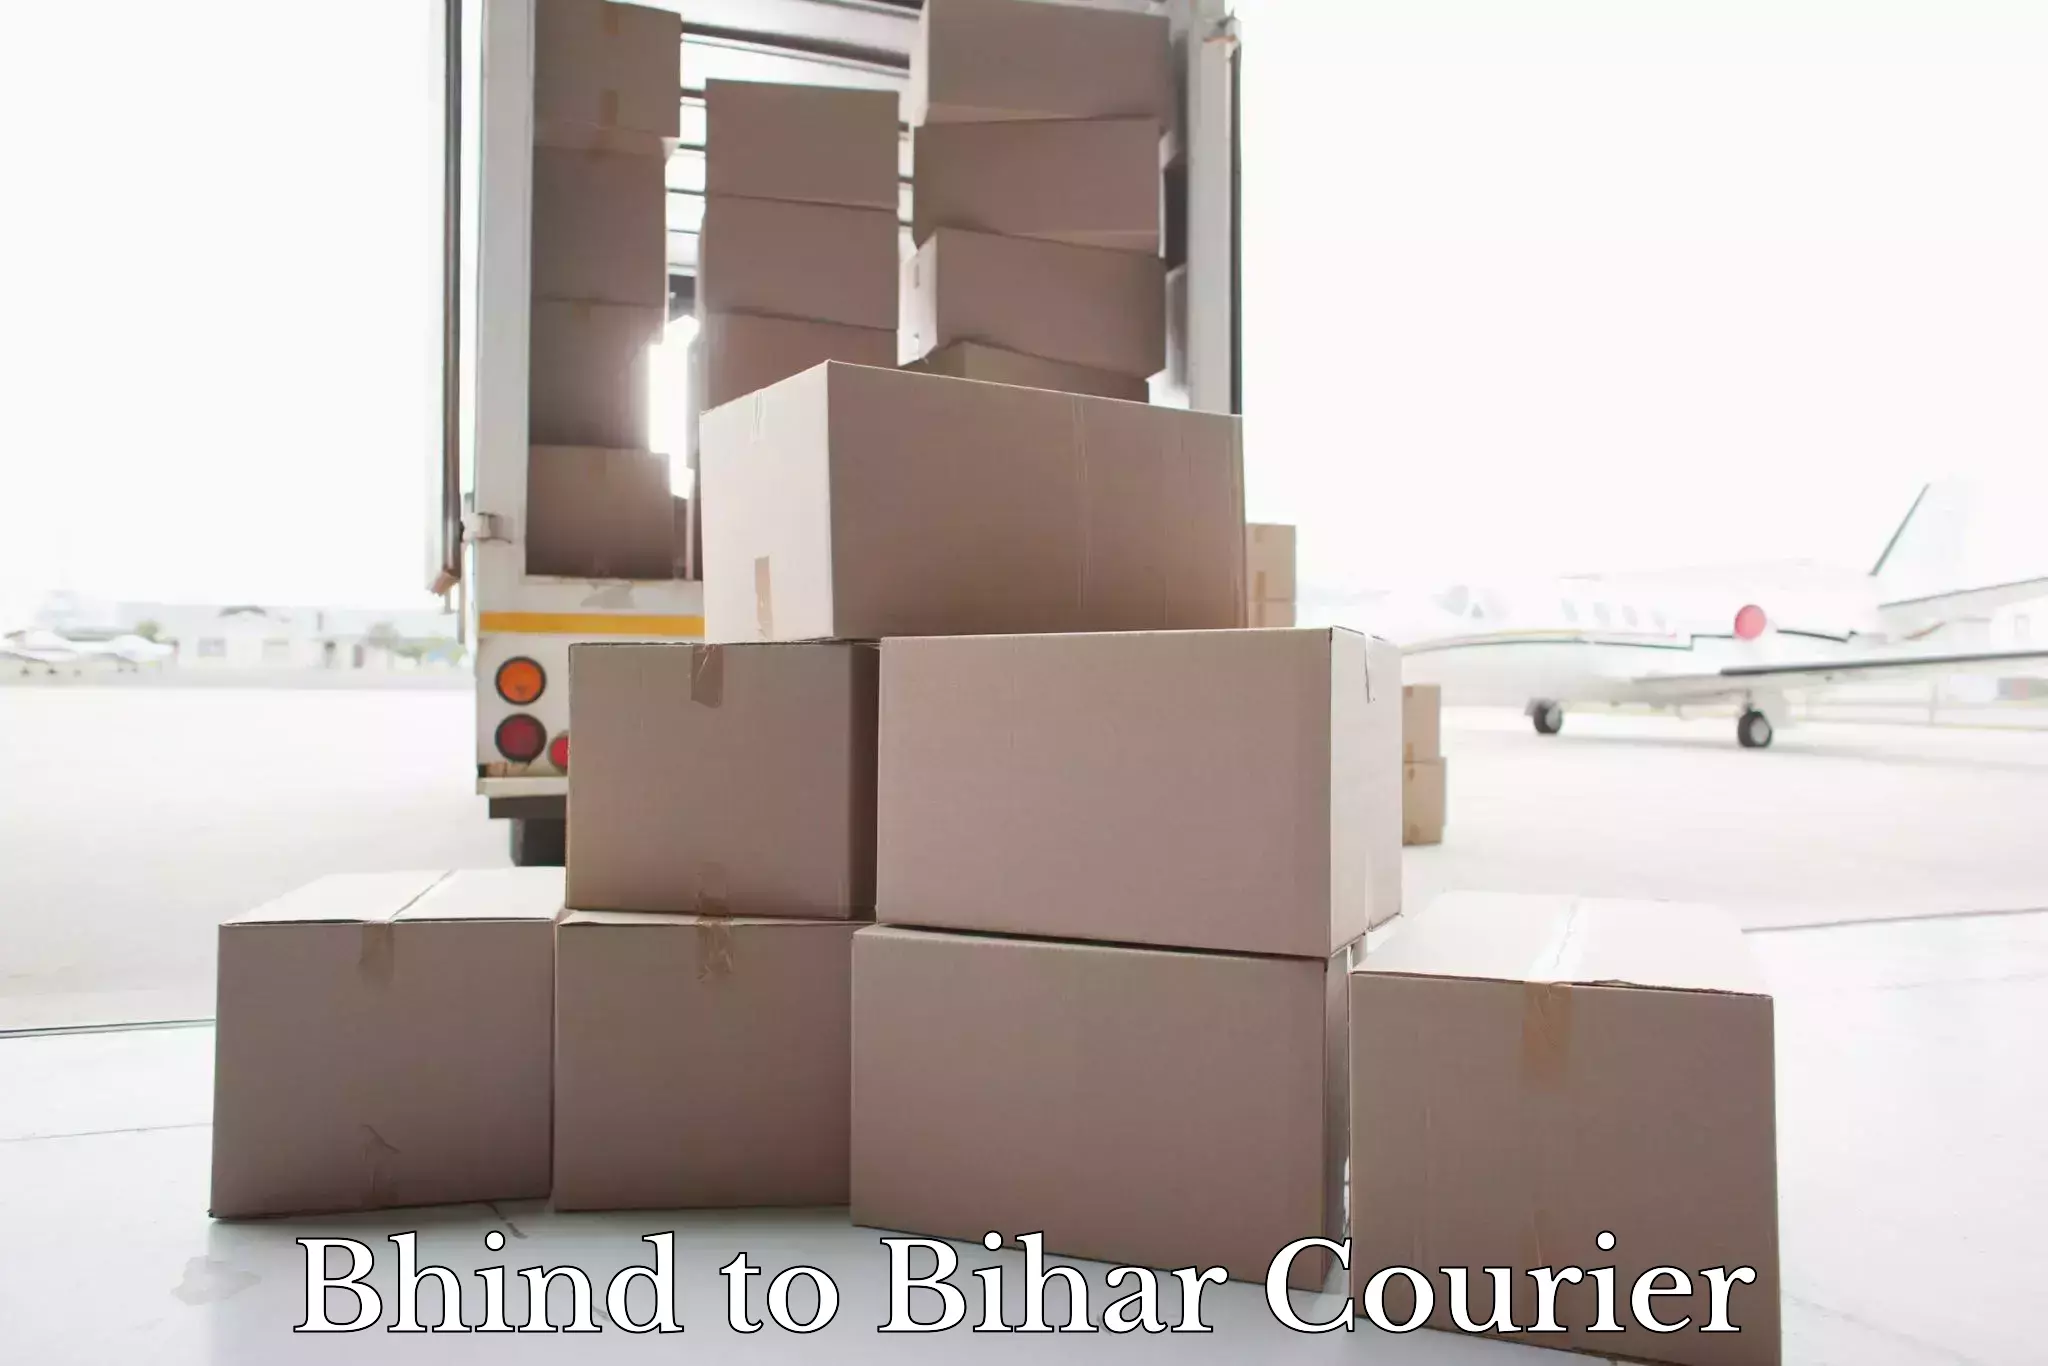 Baggage transport scheduler Bhind to Bihar